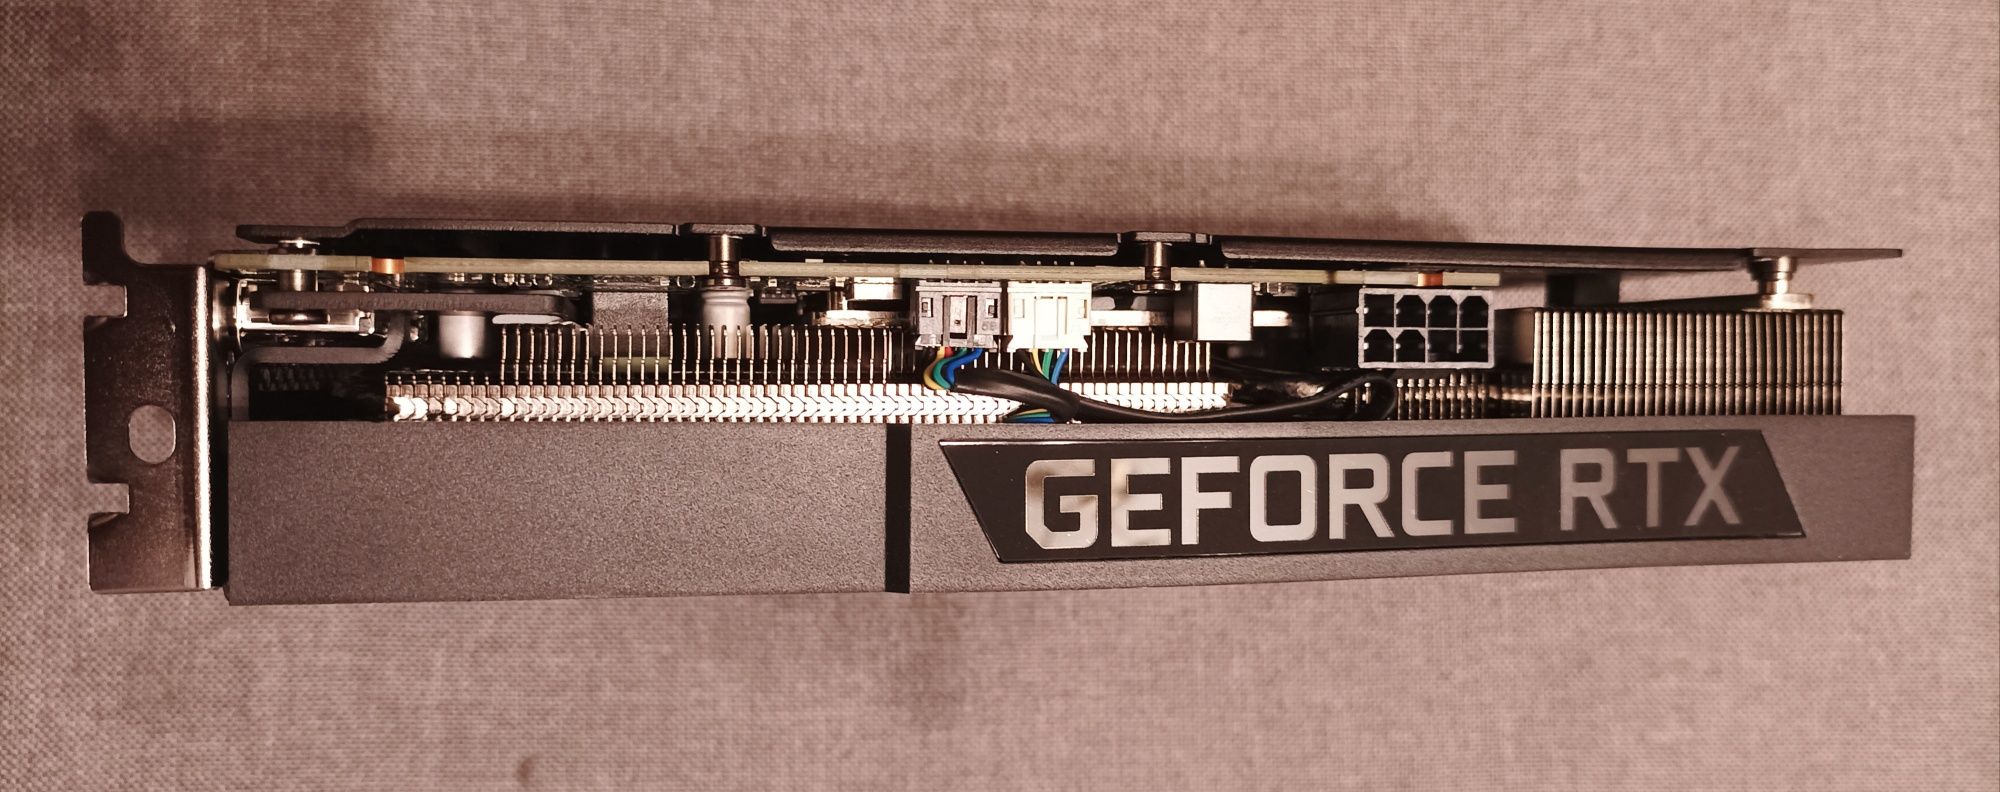 NVIDIA GeForce GTX 3060 12GB - Karta graficzna DELL